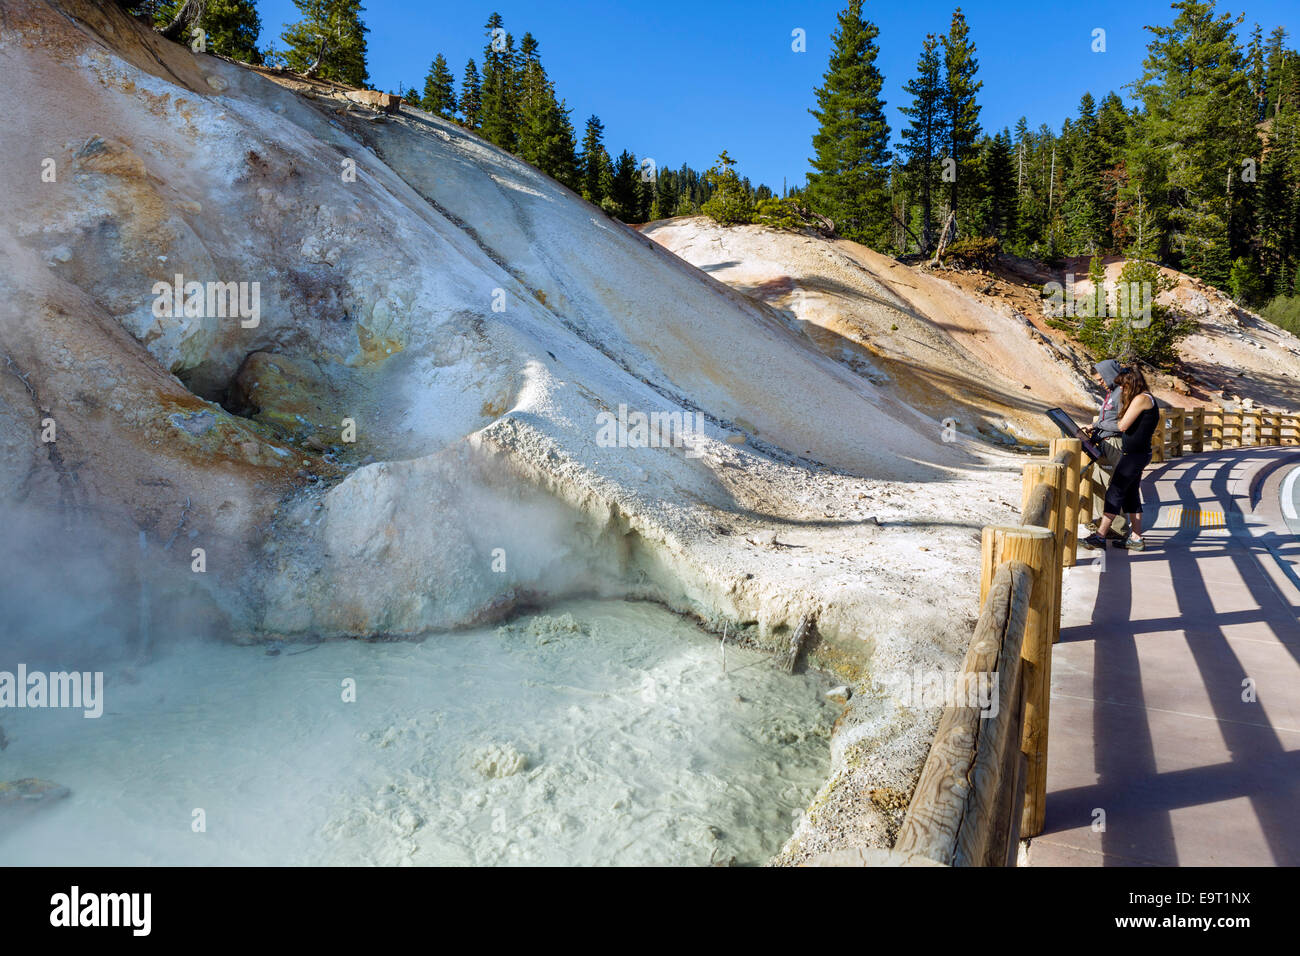 Mudpot at the Sulphur Works geothermal area, Lassen Volcanic National Park, Cascade Range, Northern California, USA Stock Photo